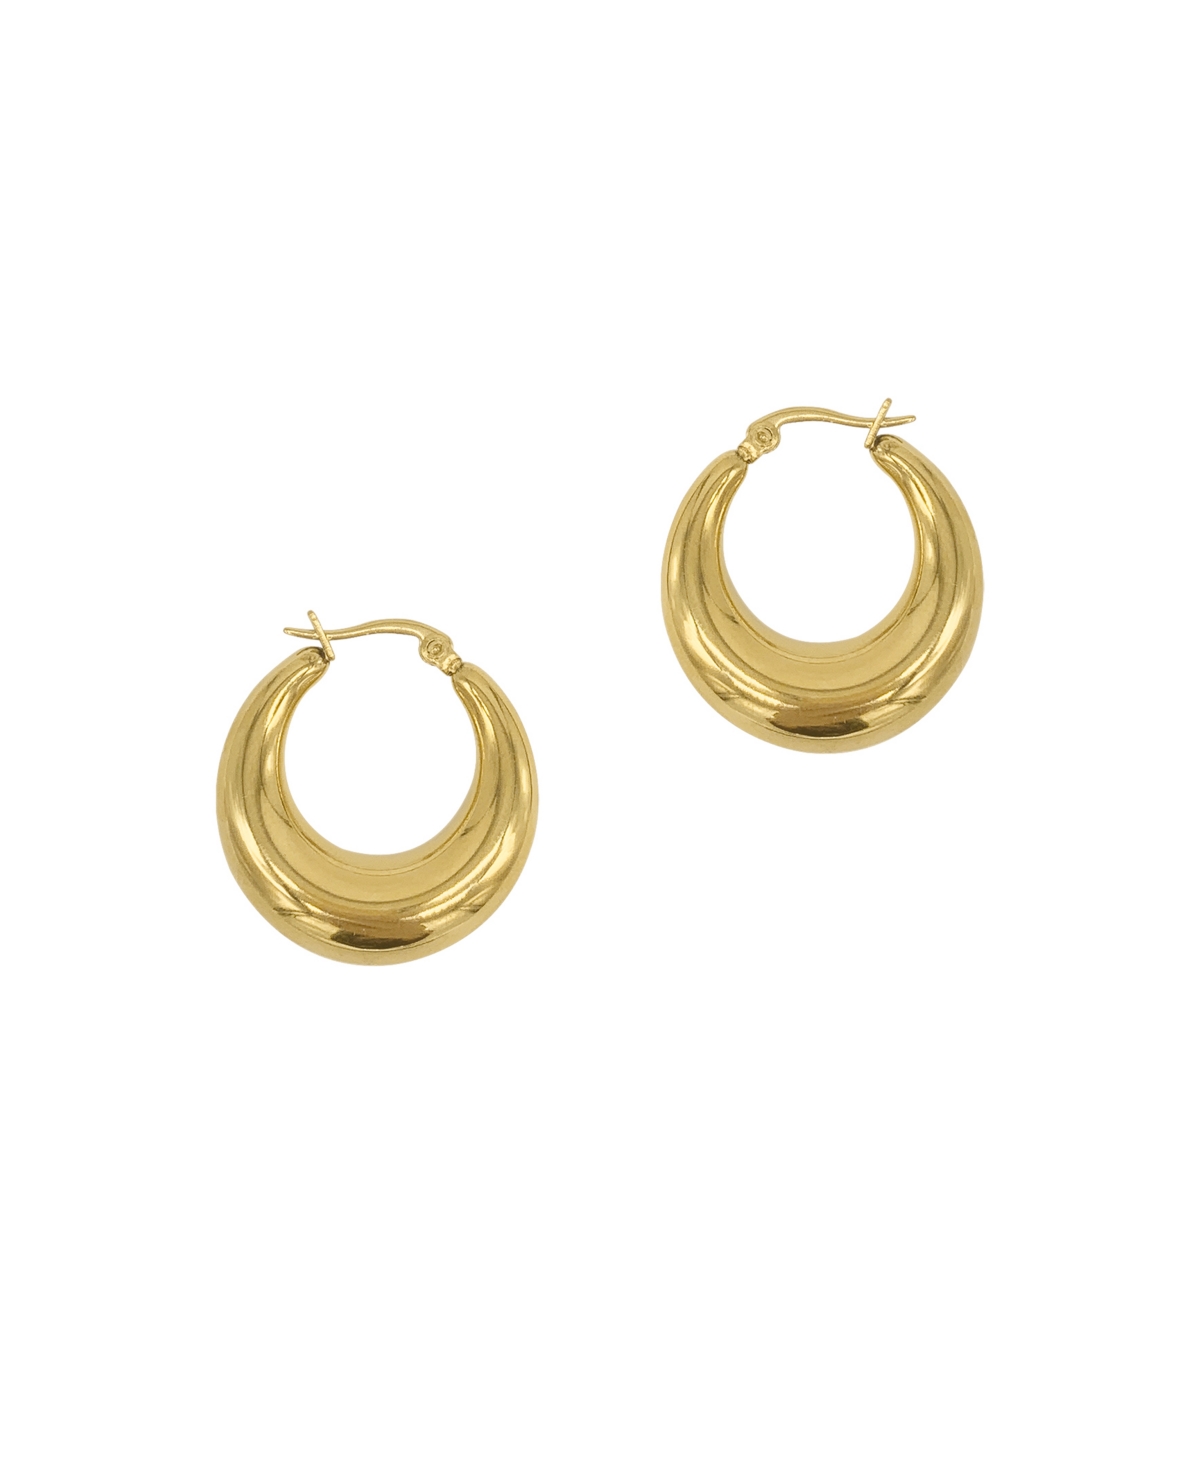 Domed Hoops Earrings - Yellow Gold-Tone